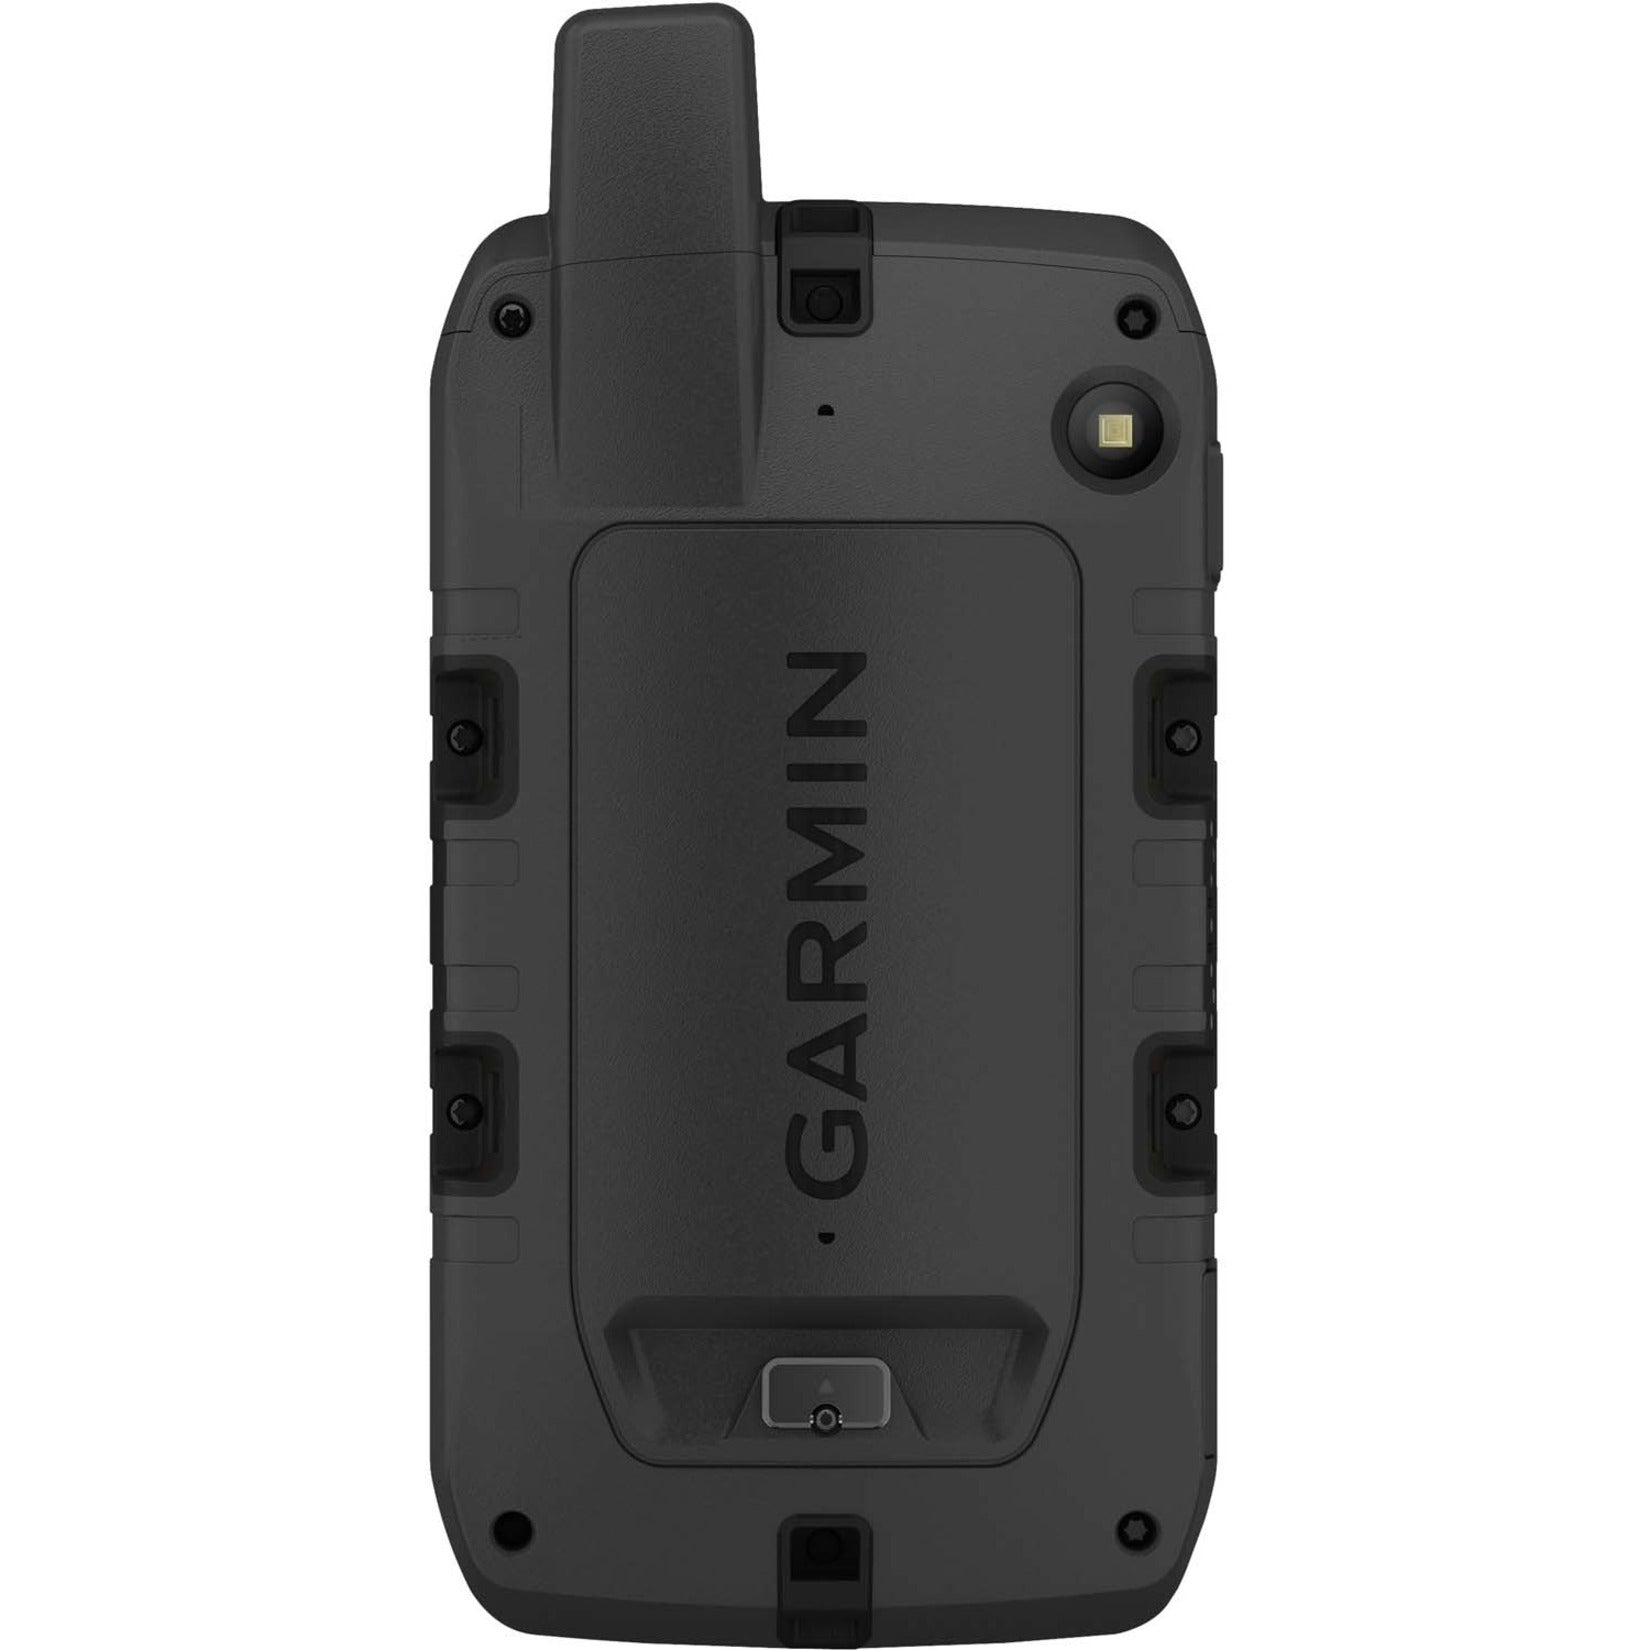 Garmin 010-02133-00 Montana 700 Rugged GPS Touchscreen Navigator, 5" Display, Built-in Bluetooth